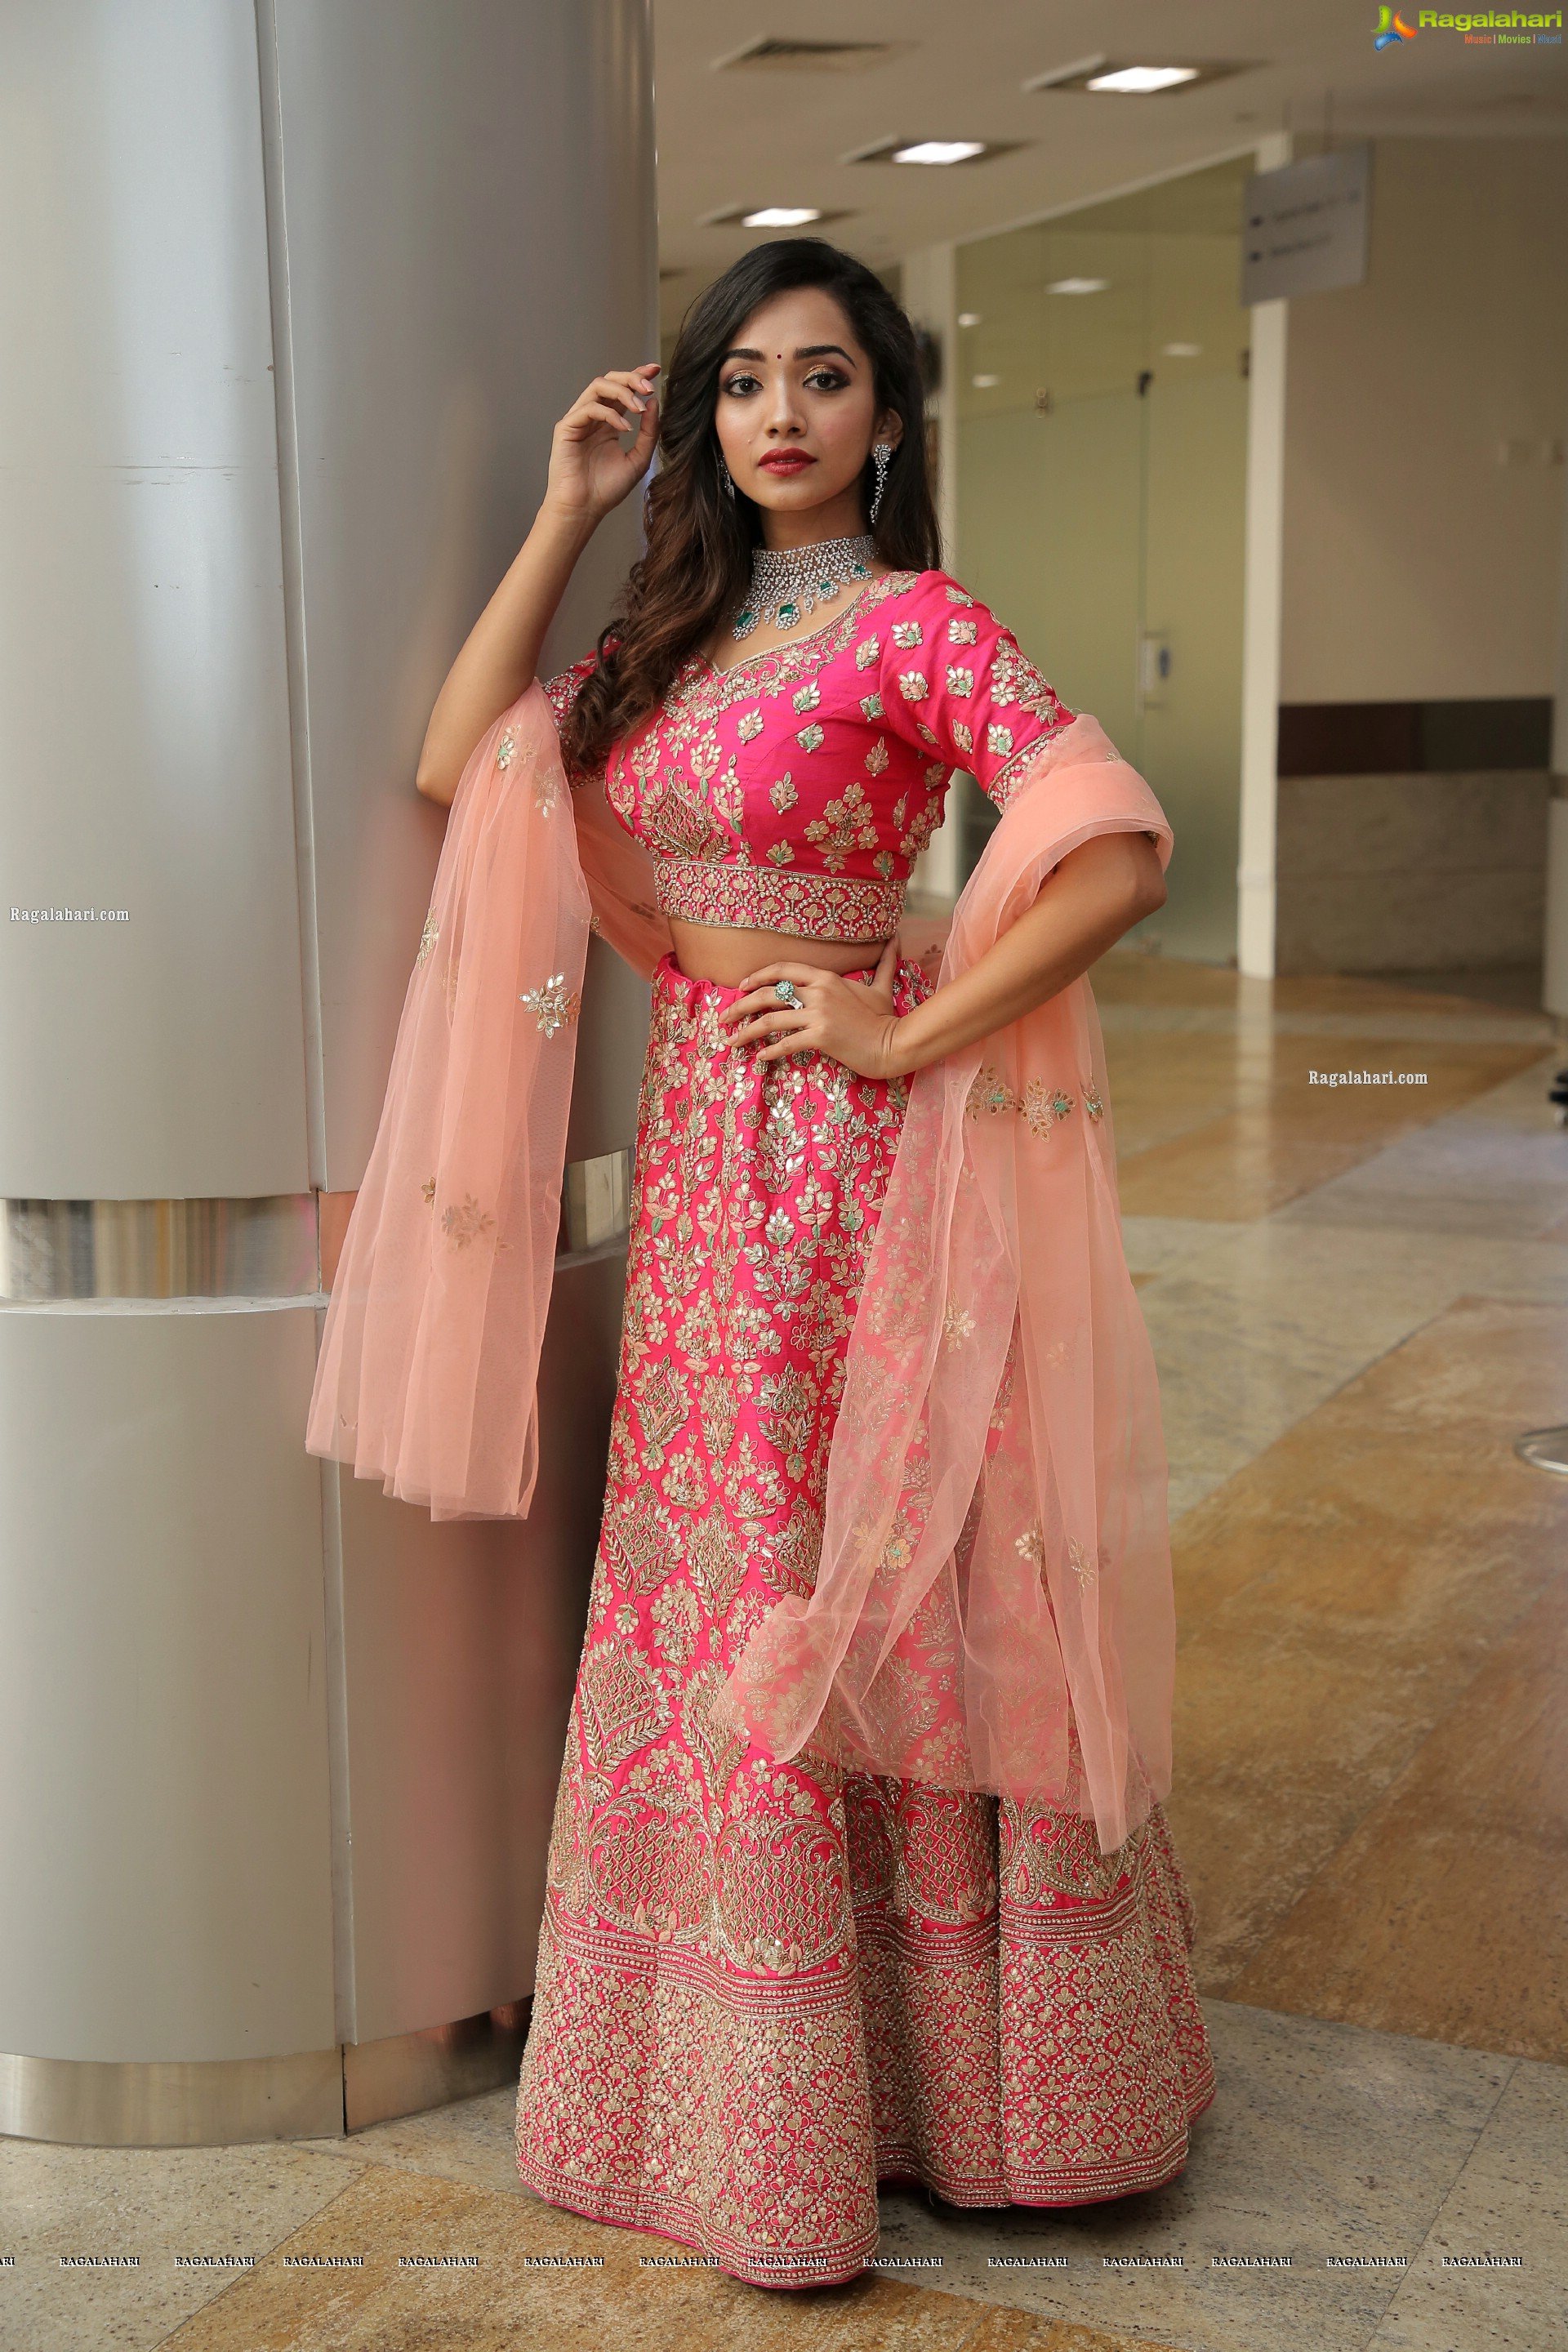 Saanve Megghana in Pink Embellished Lehenga Choli, HD Photo Gallery